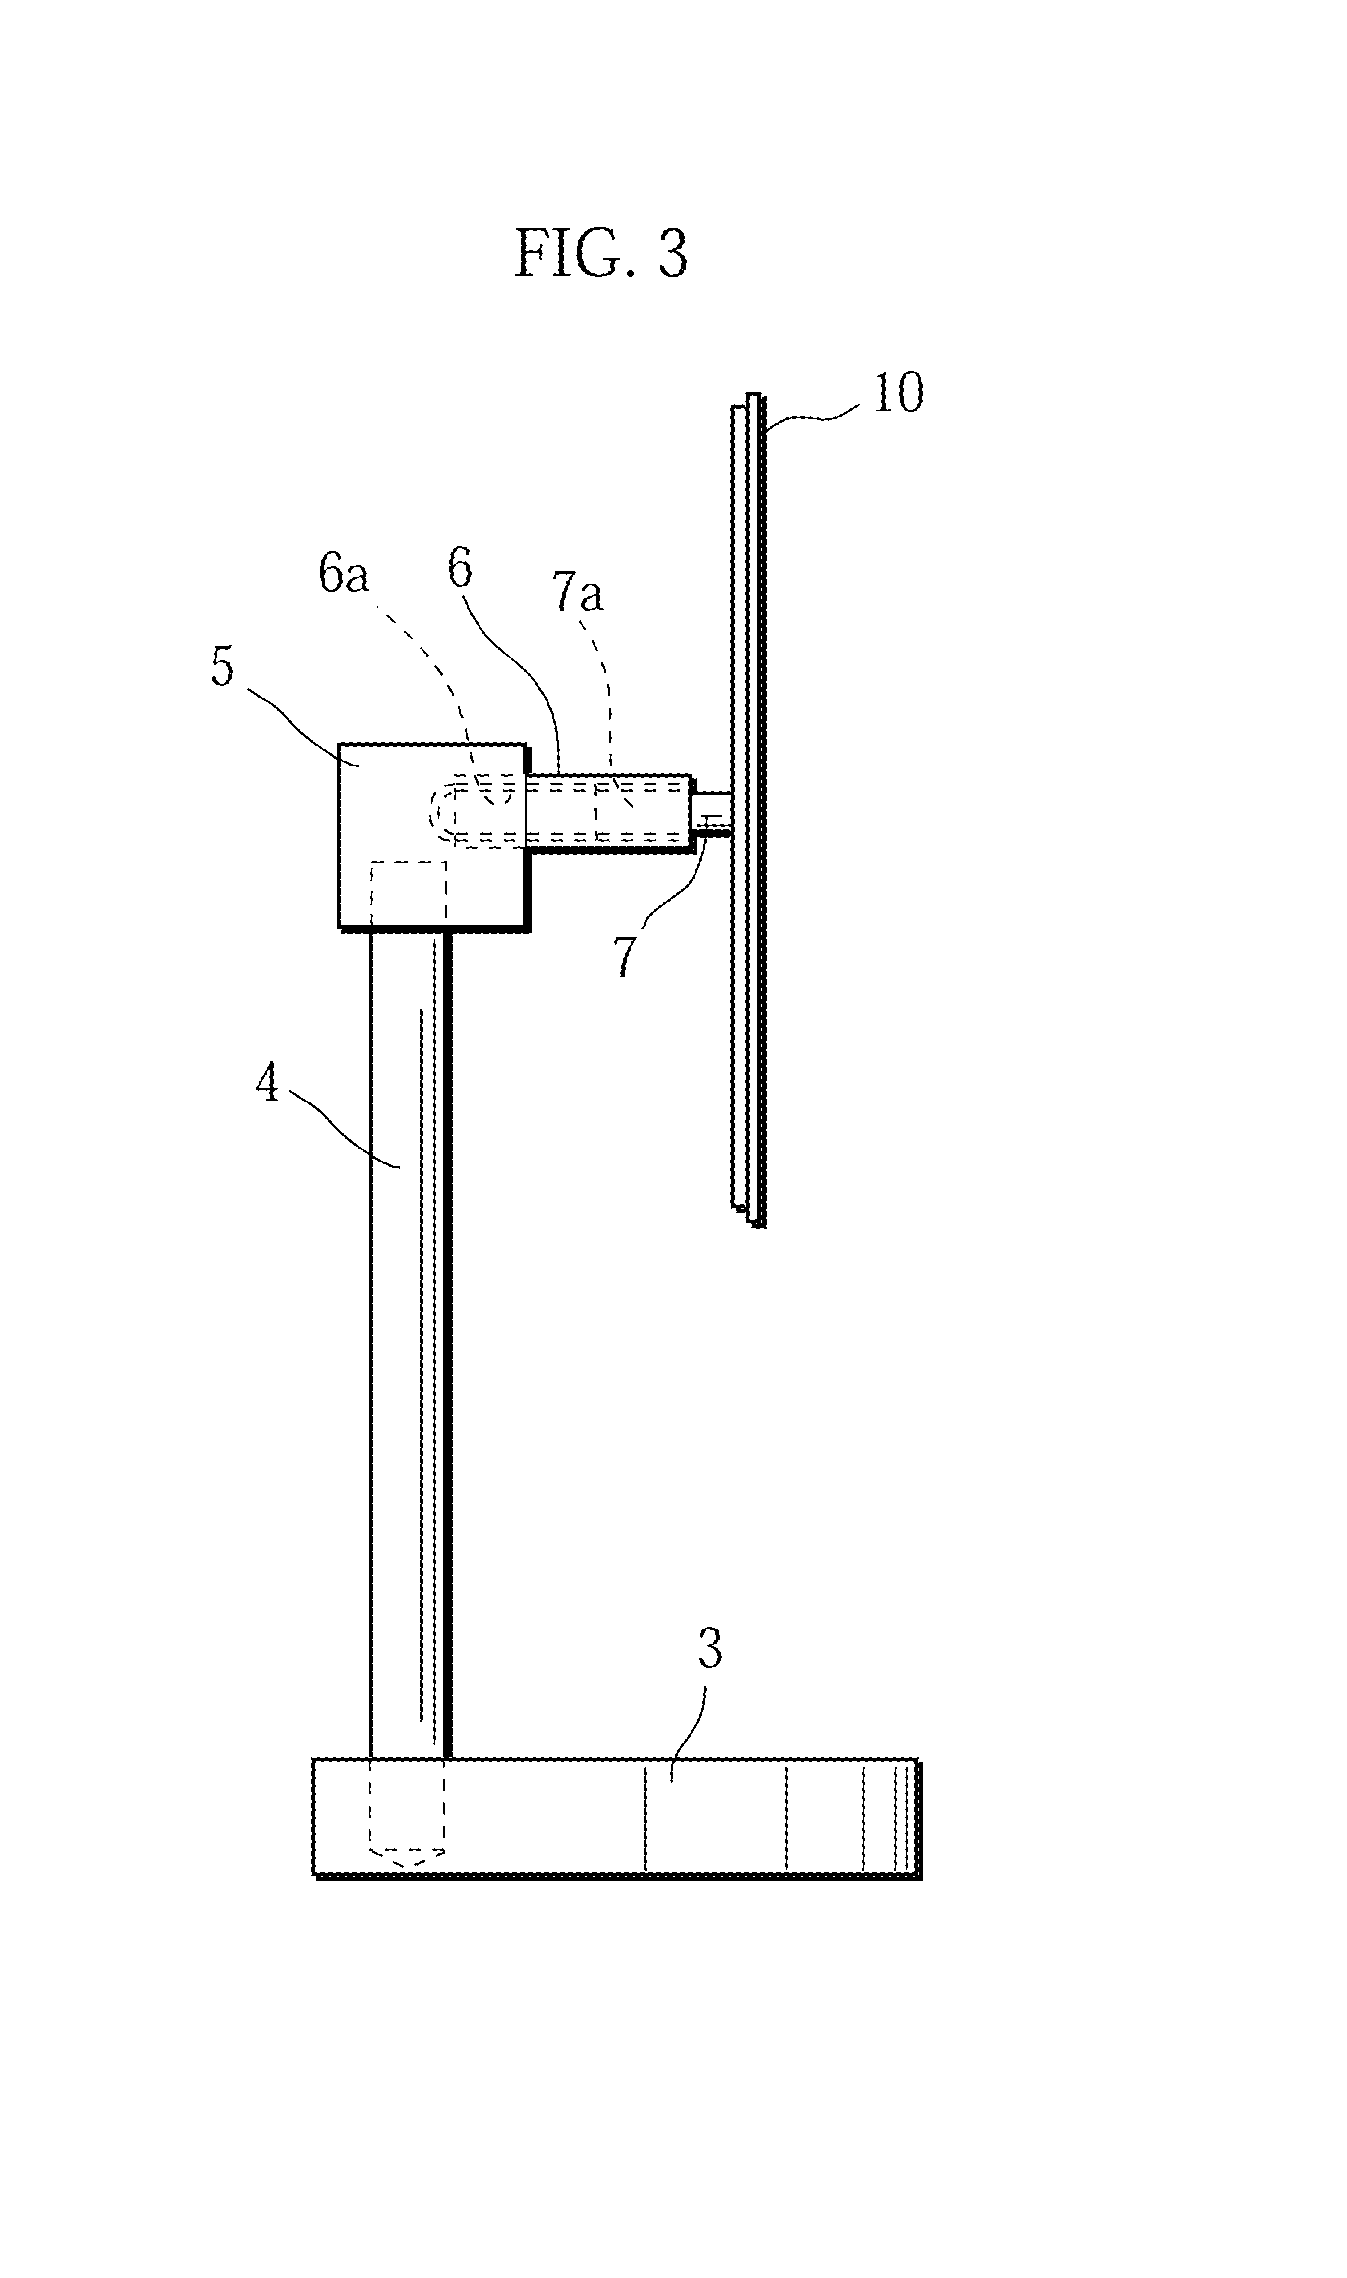 CVD apparatus, method of manufacturing susceptor using the CVD apparatus, and susceptor